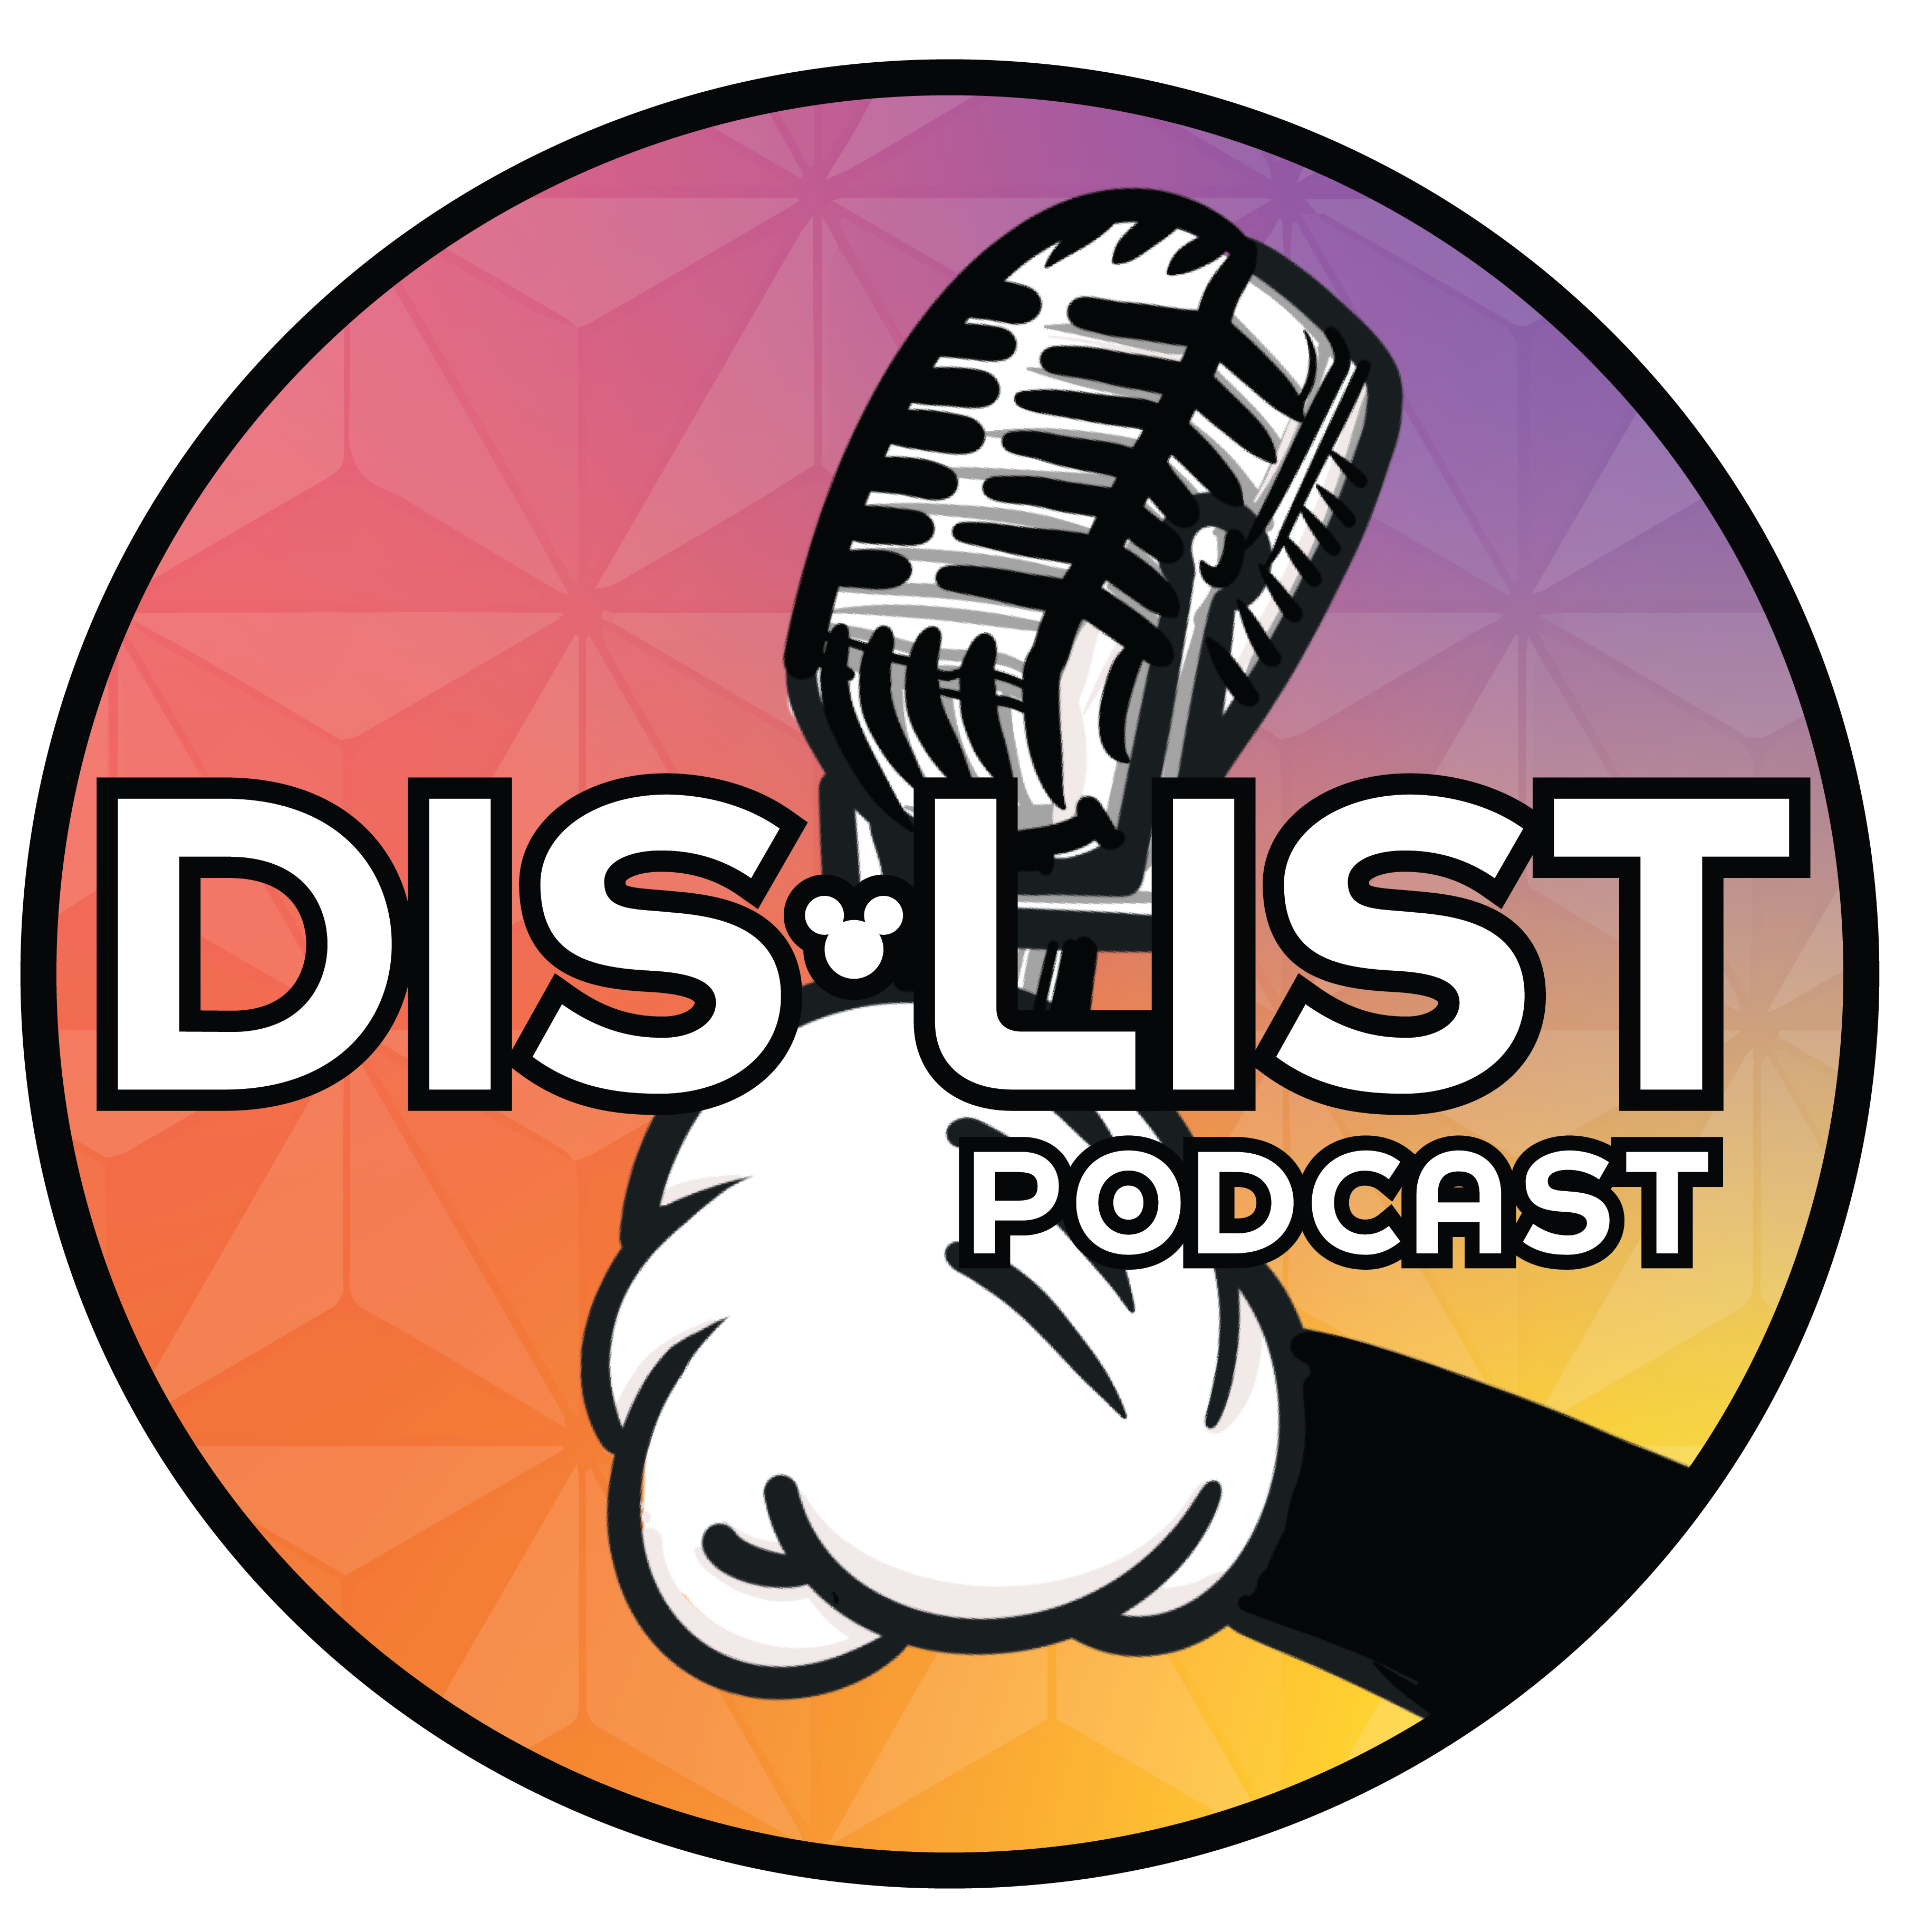 Dis-List Podcast